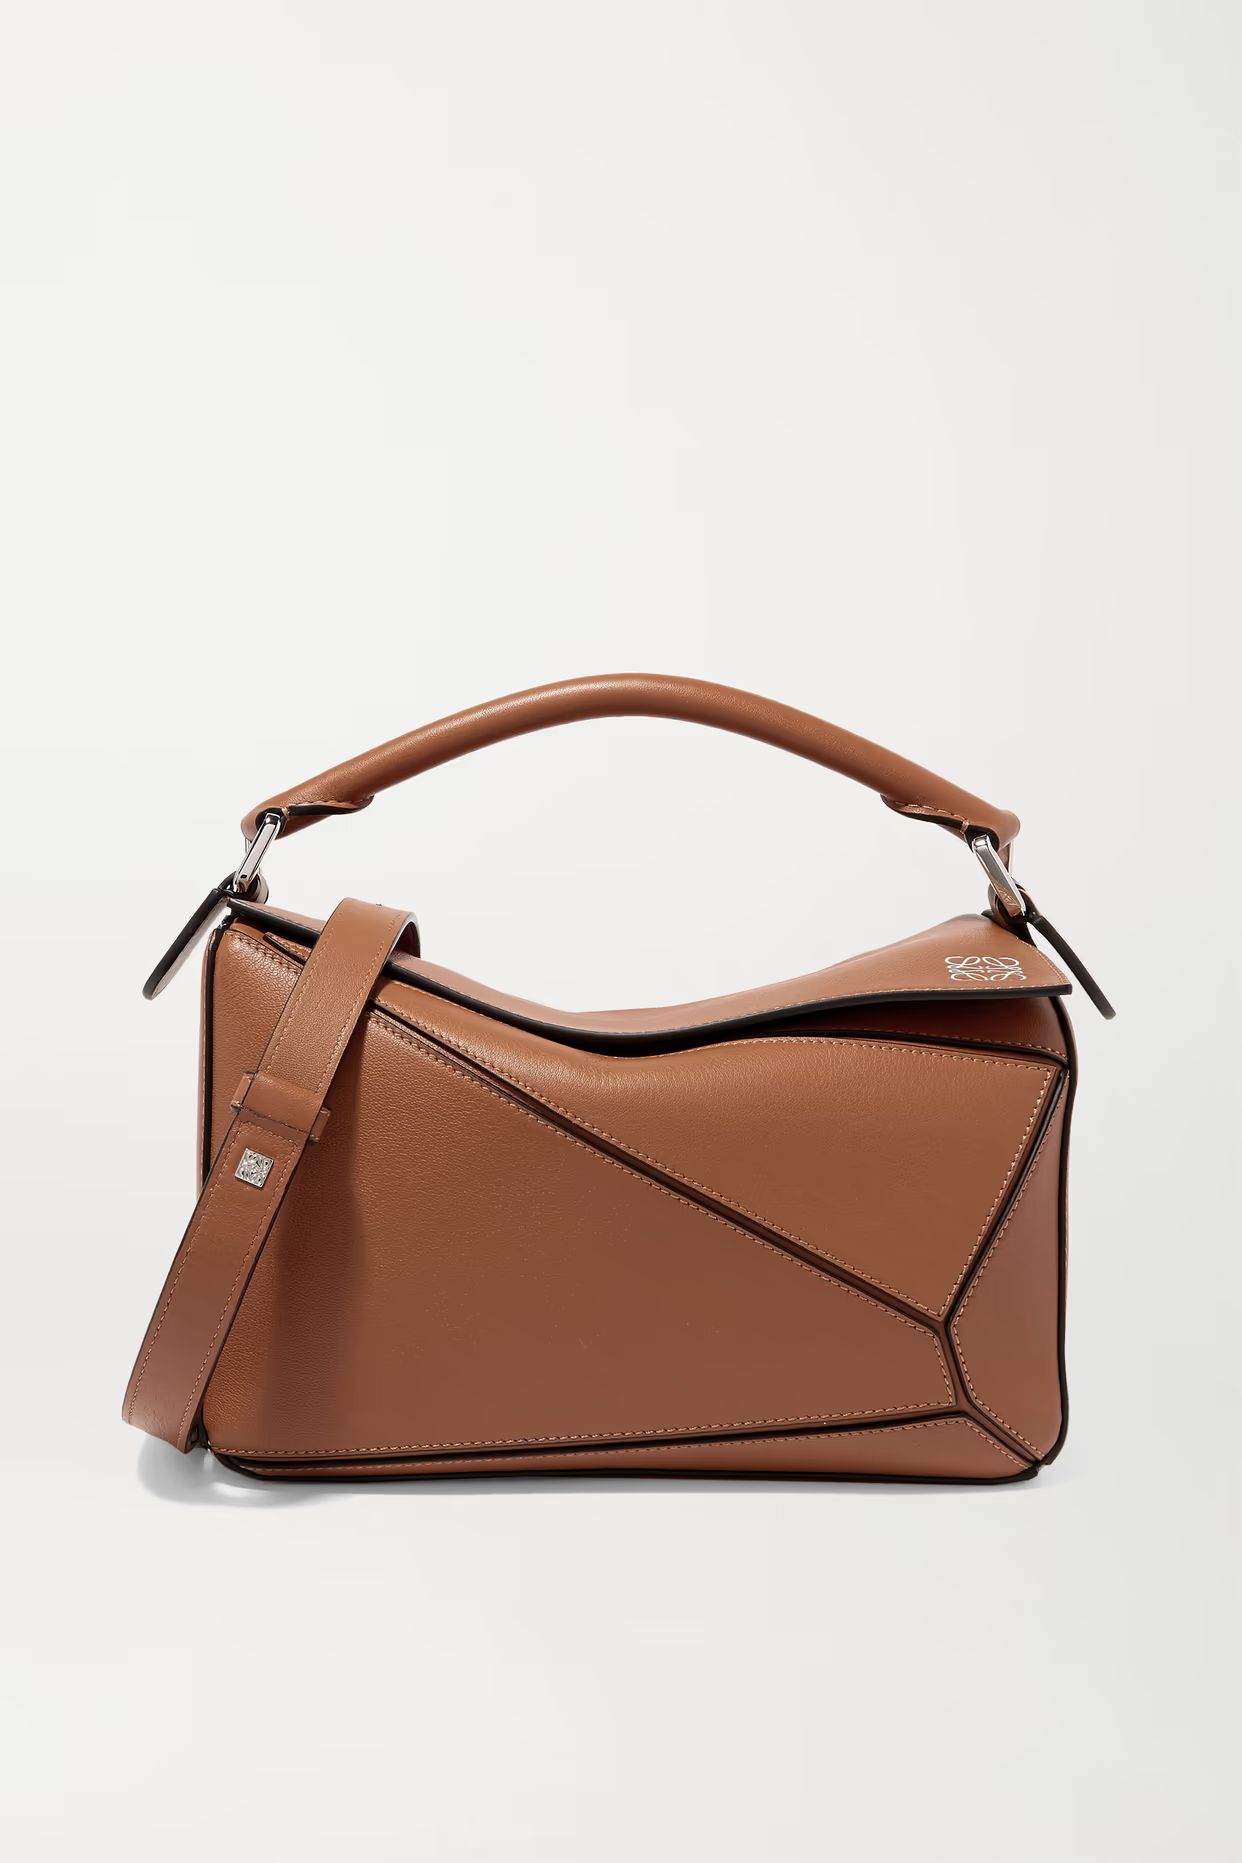 Loewe - Puzzle Small Leather Shoulder Bag - Tan | NET-A-PORTER (UK & EU)